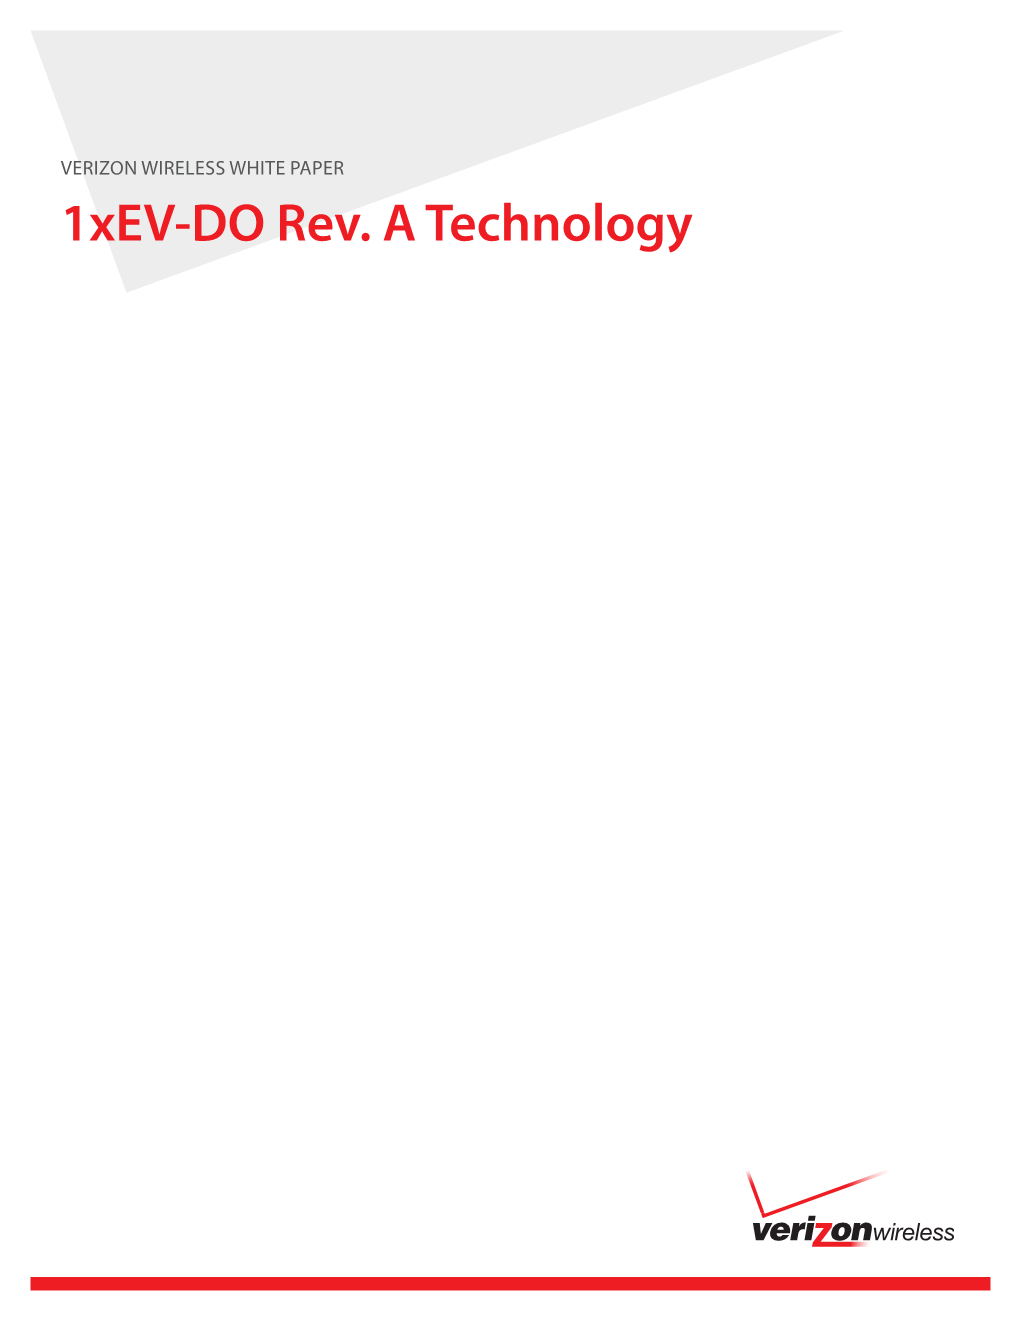 1Xev-DO Rev. a Technology Verizon Wireless White Paper 1Xev-DO Rev